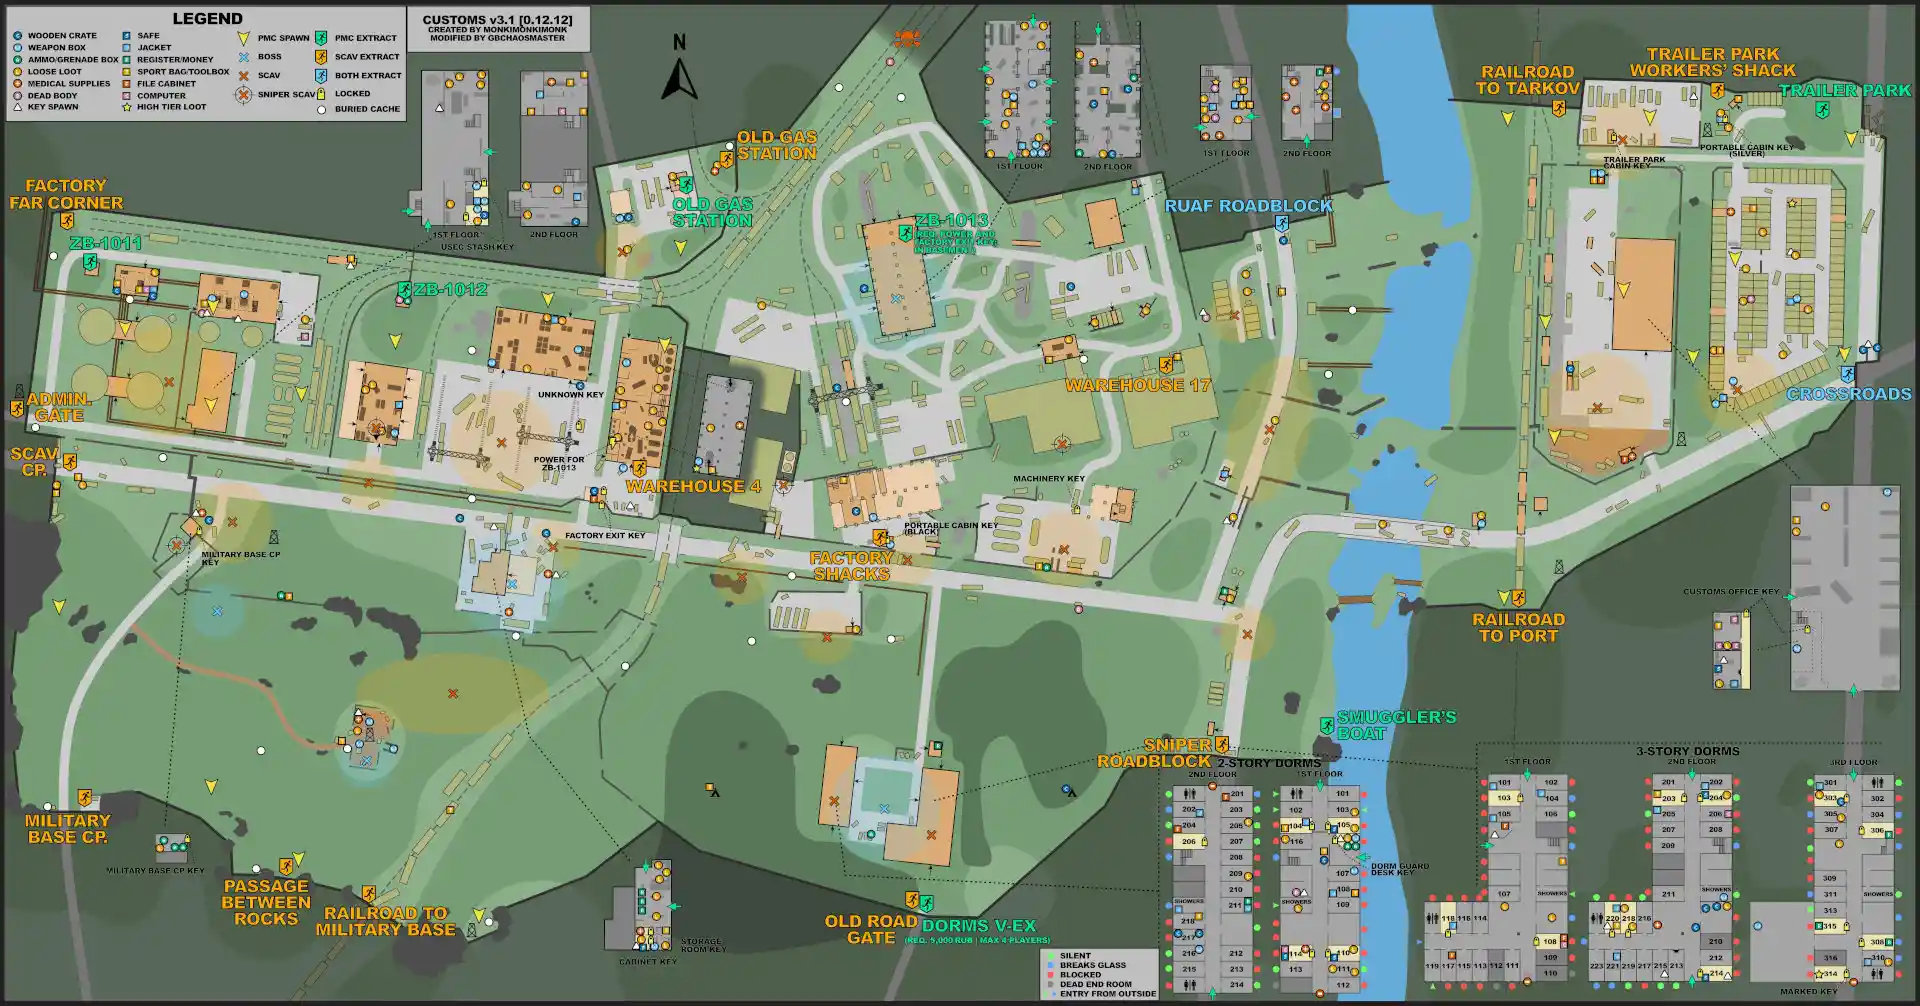 CUSTOMS-ESC-MAP-2D_Ver0.12.12.jpg